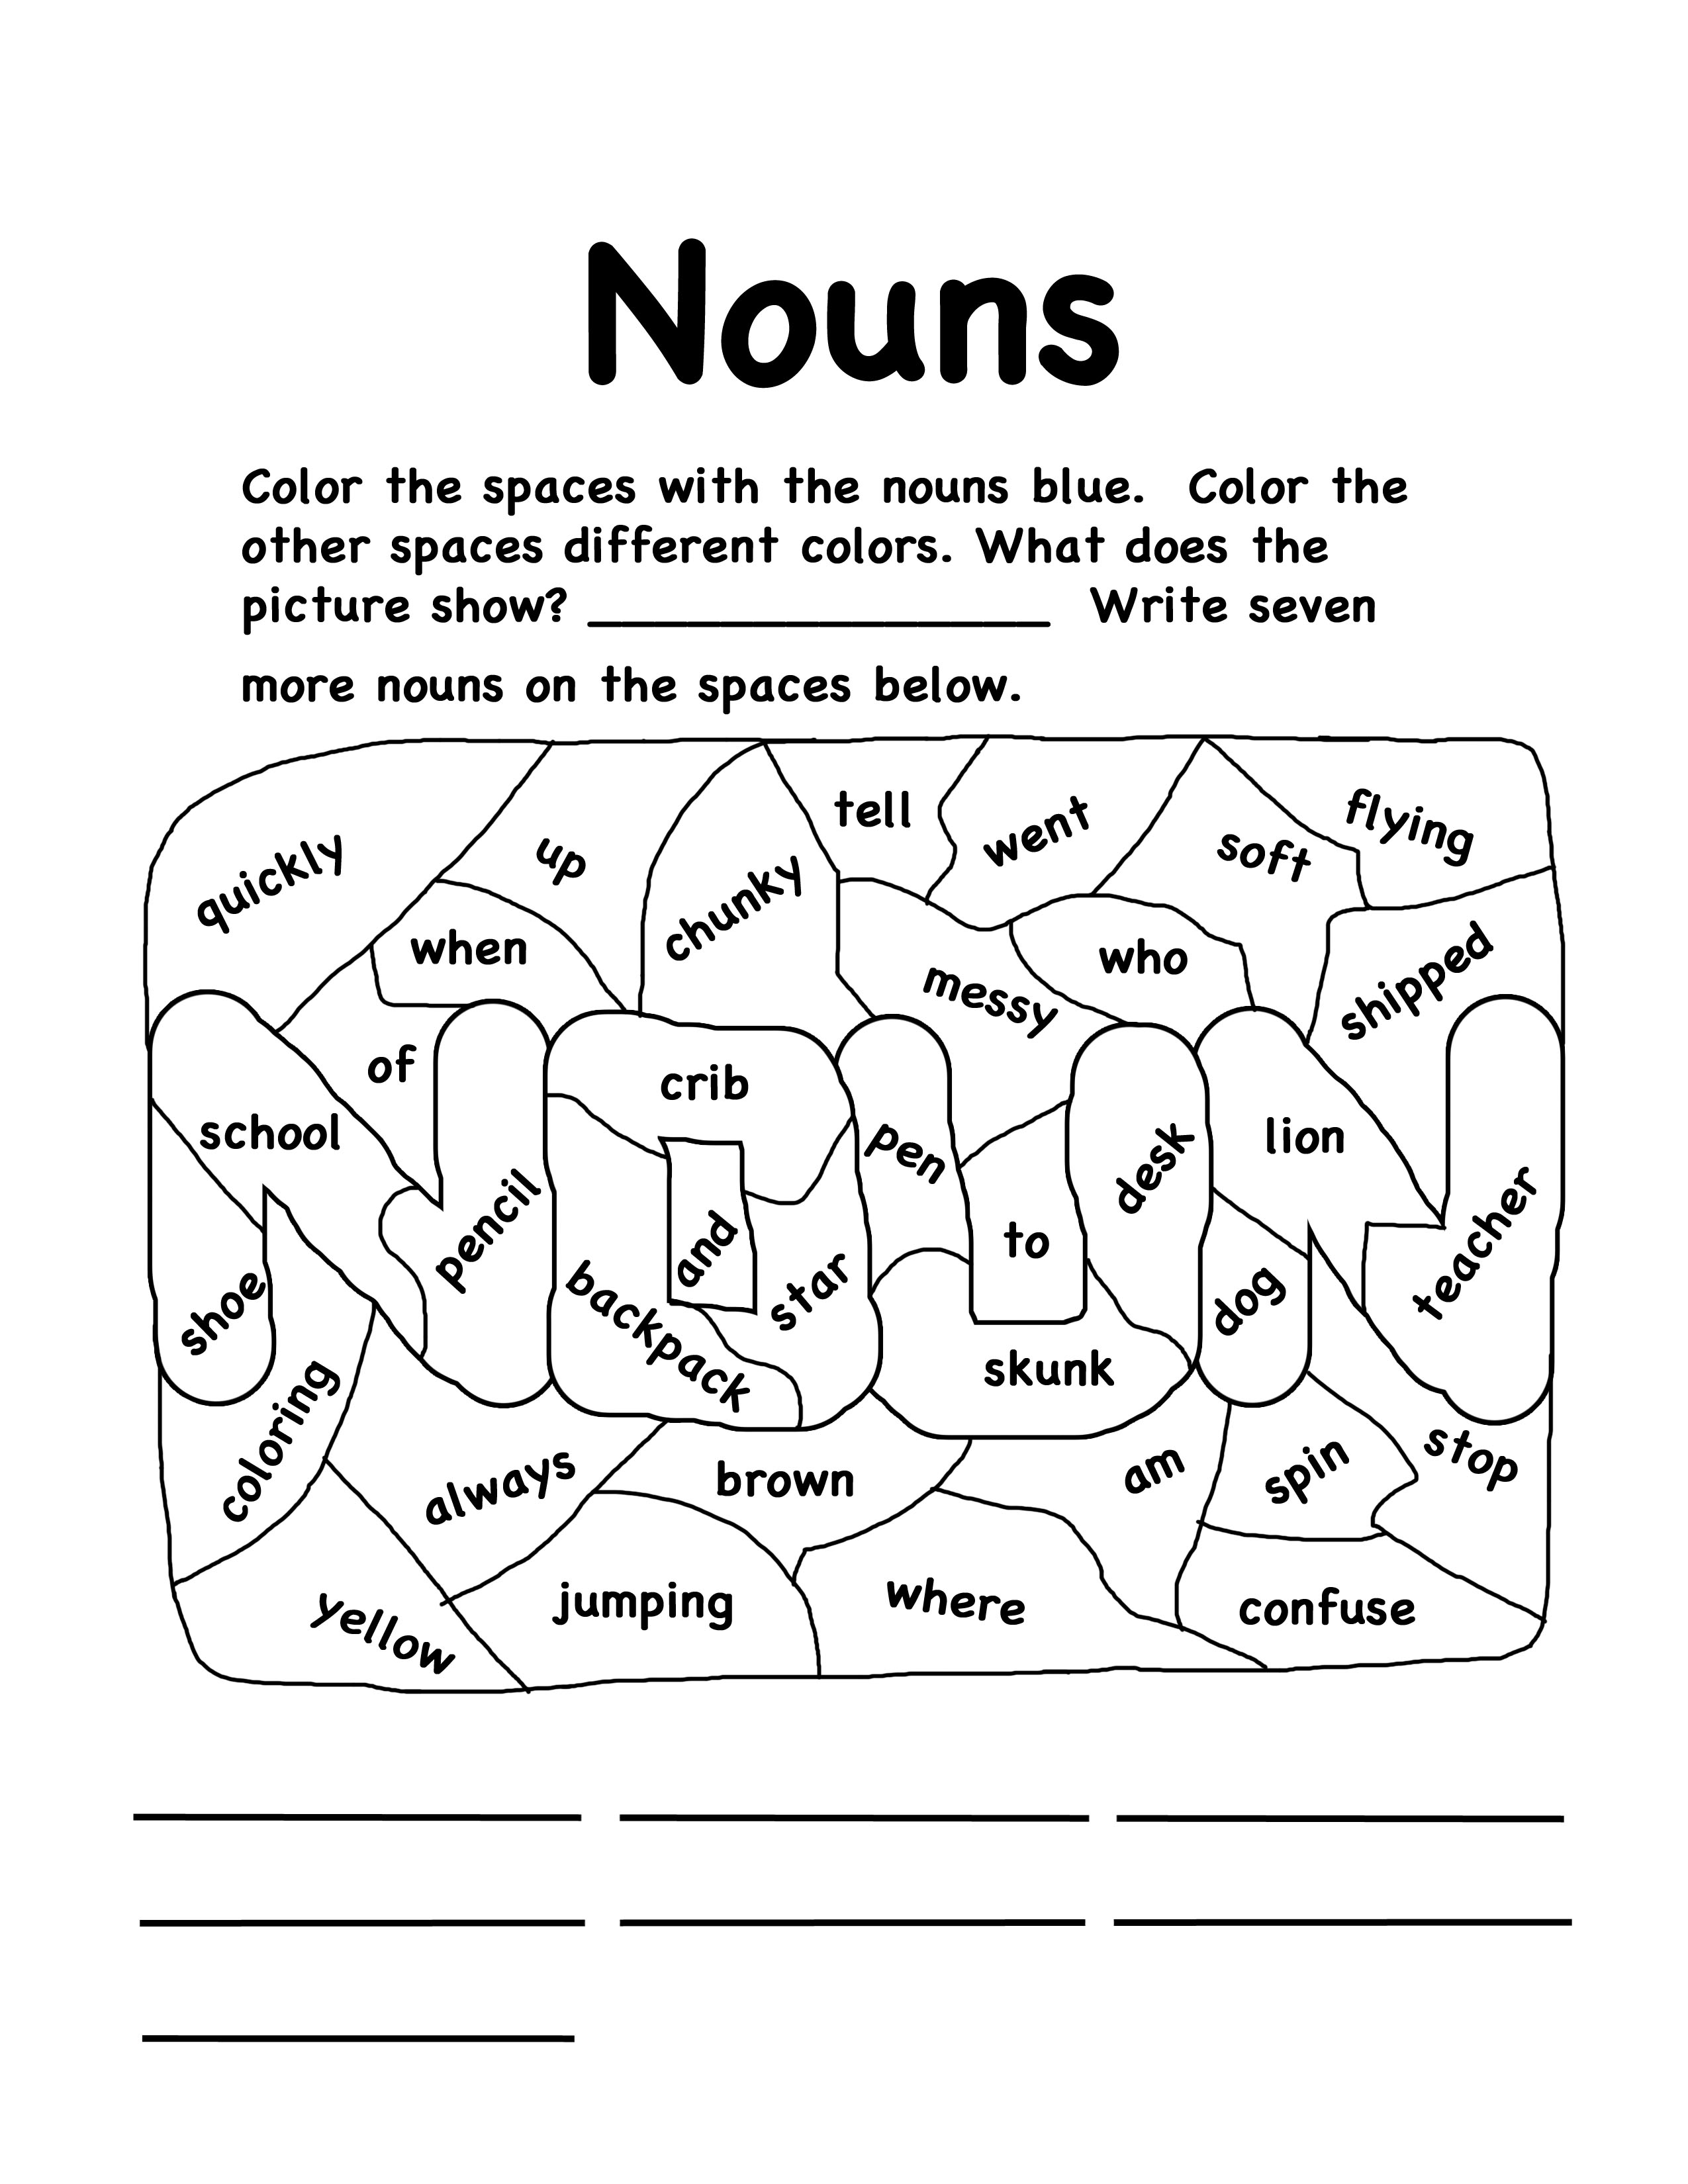 noun-coloring-sheet